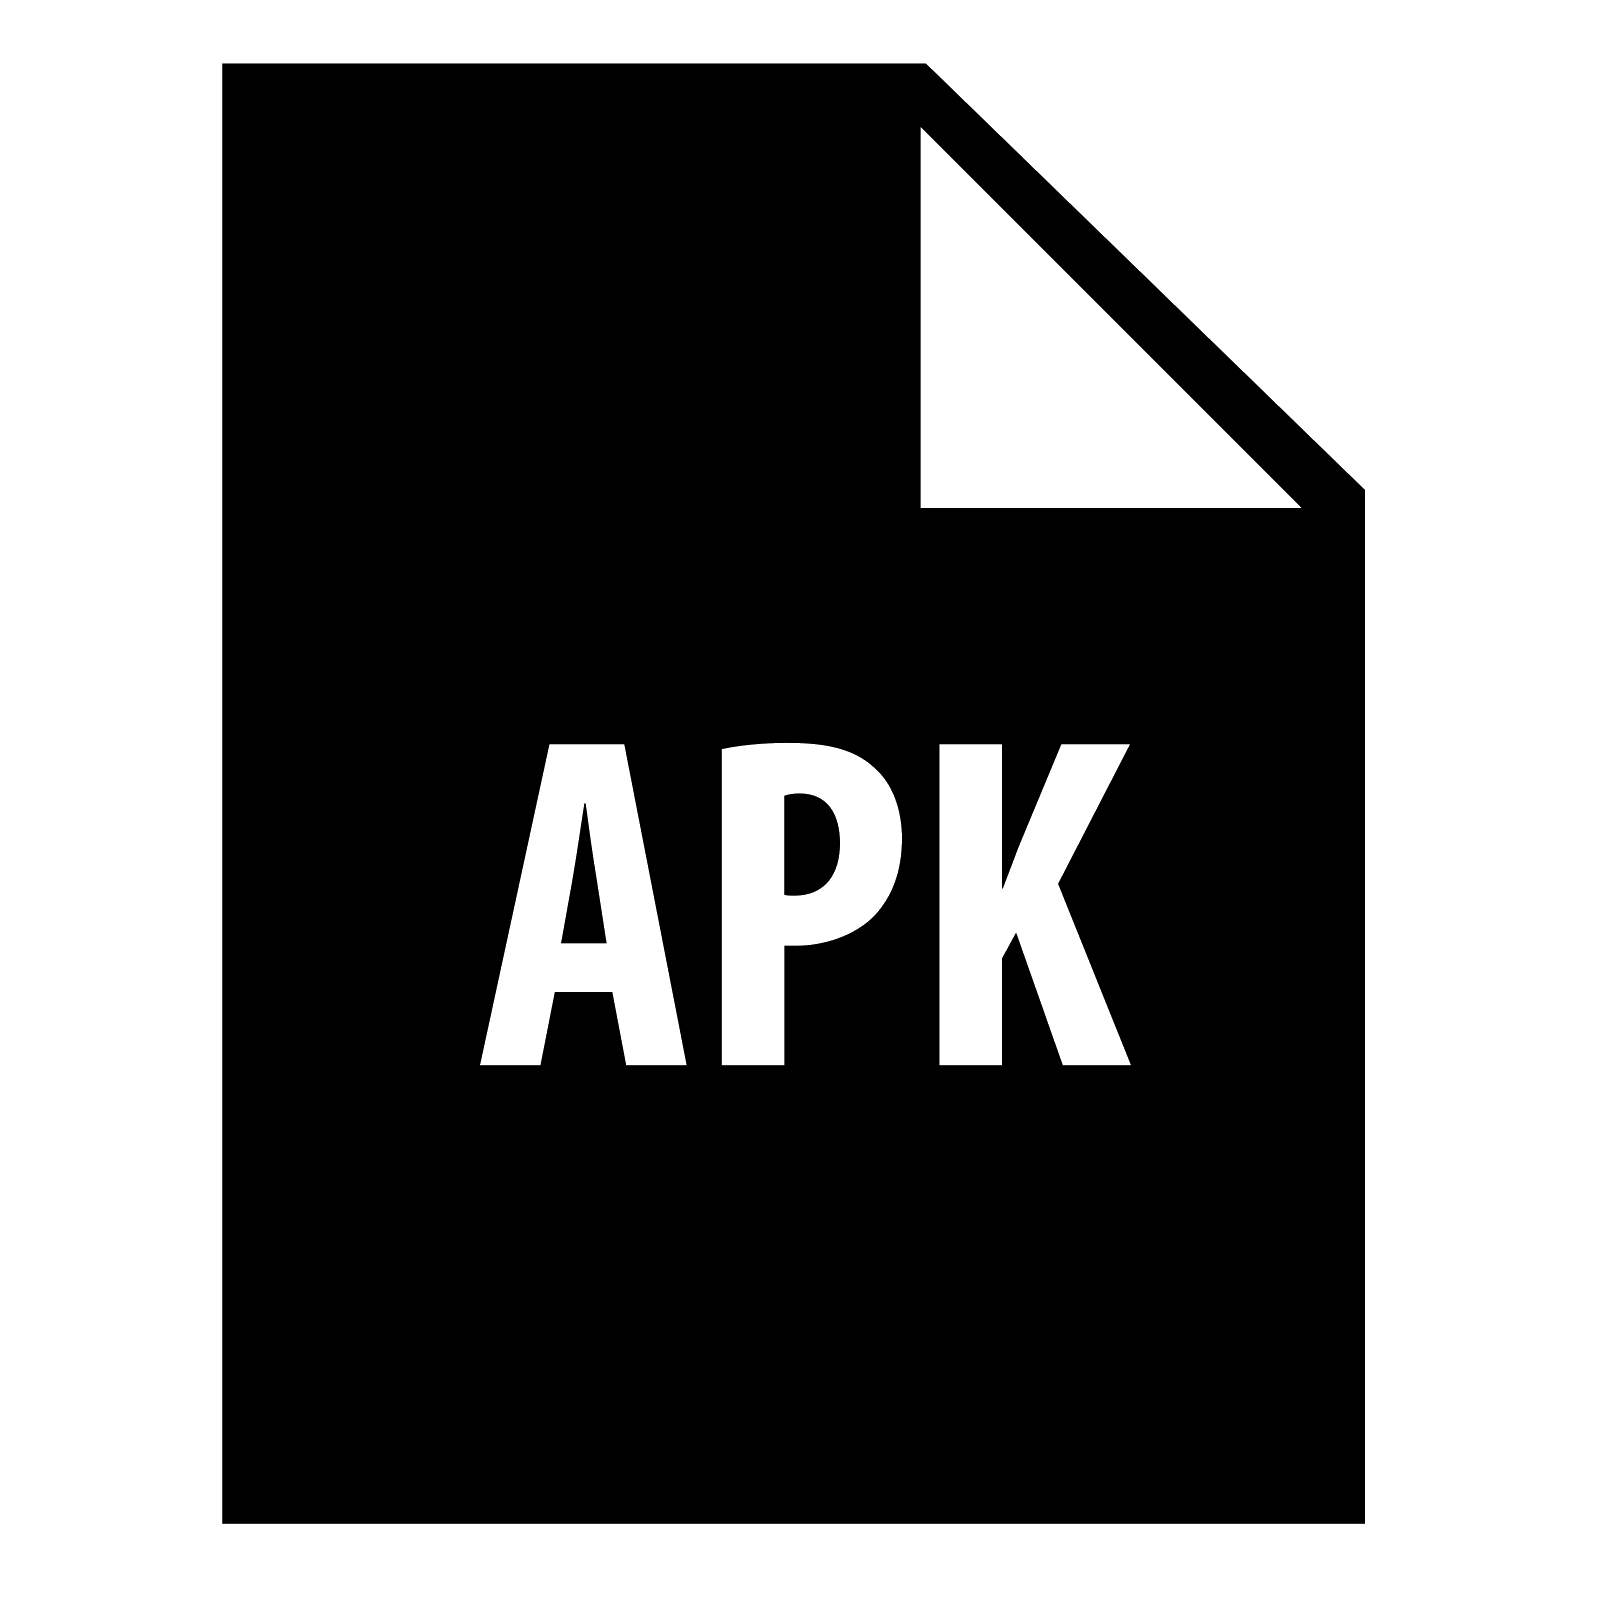 Black APK Icon PNG Image